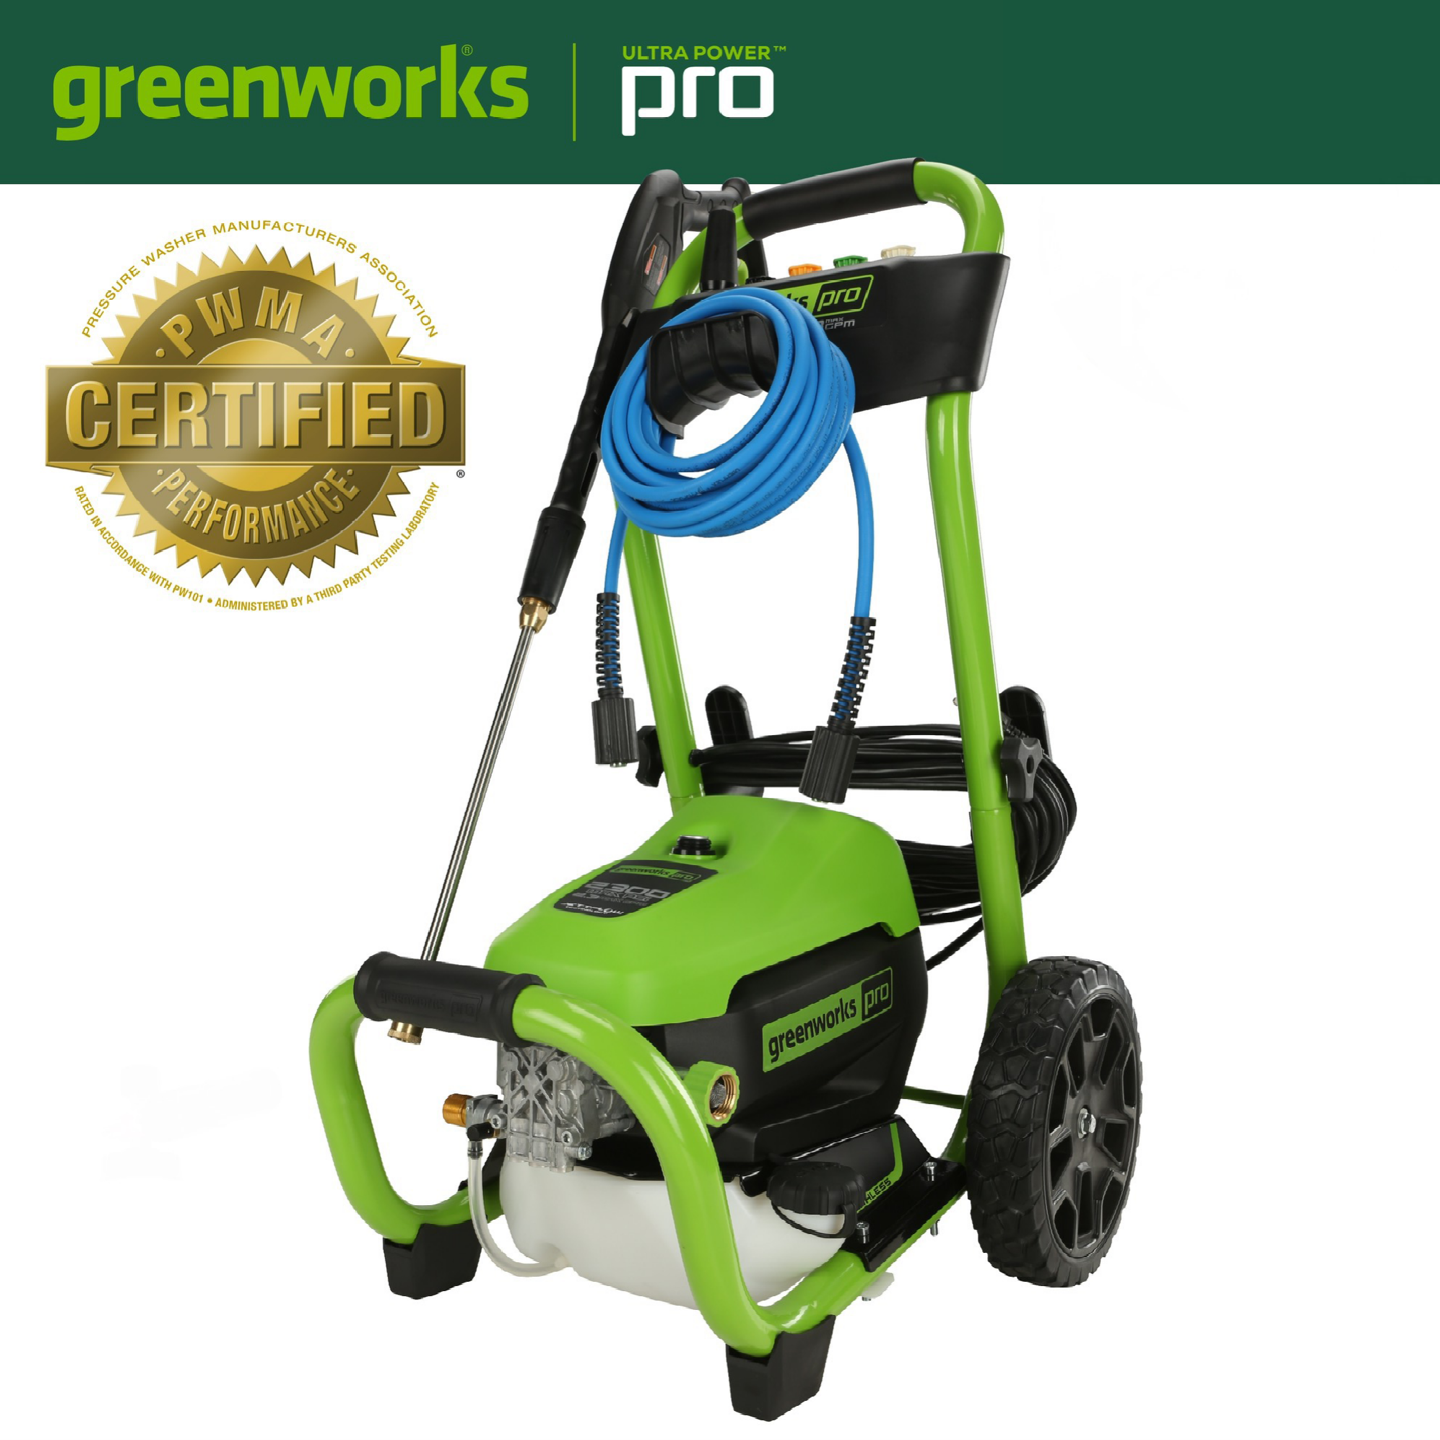 greenworkstools-2300-PSI Brushless 2.3-GPM Electric Pressure Washer | Greenworks Pro